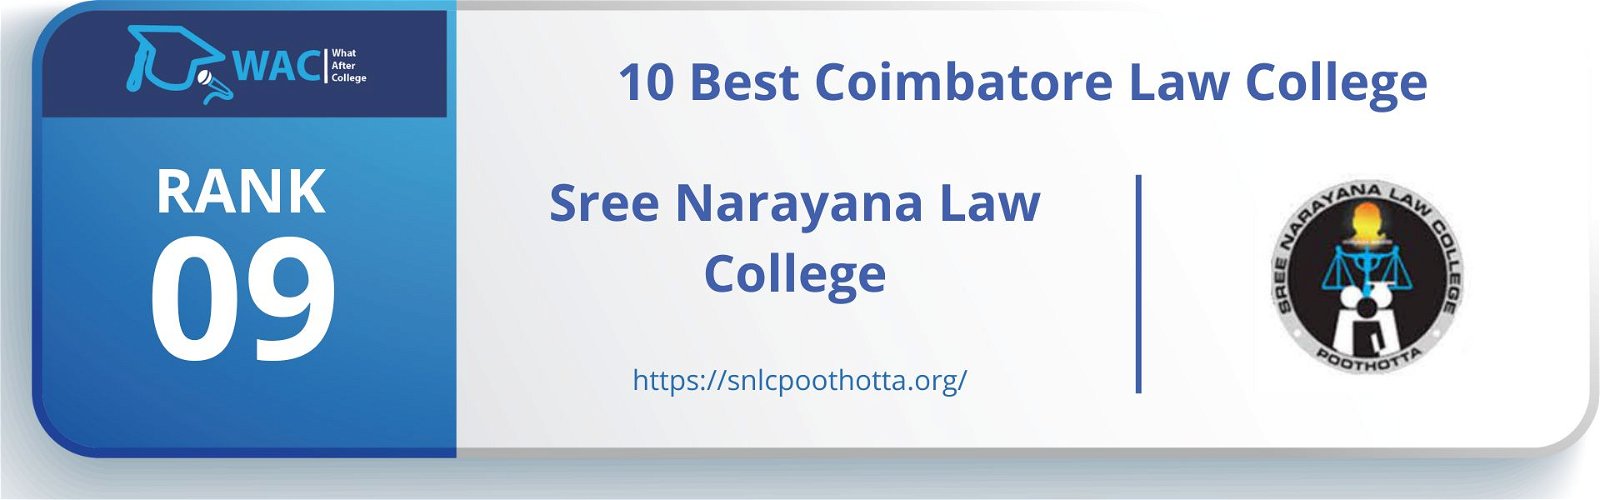 Coimbatore Law College